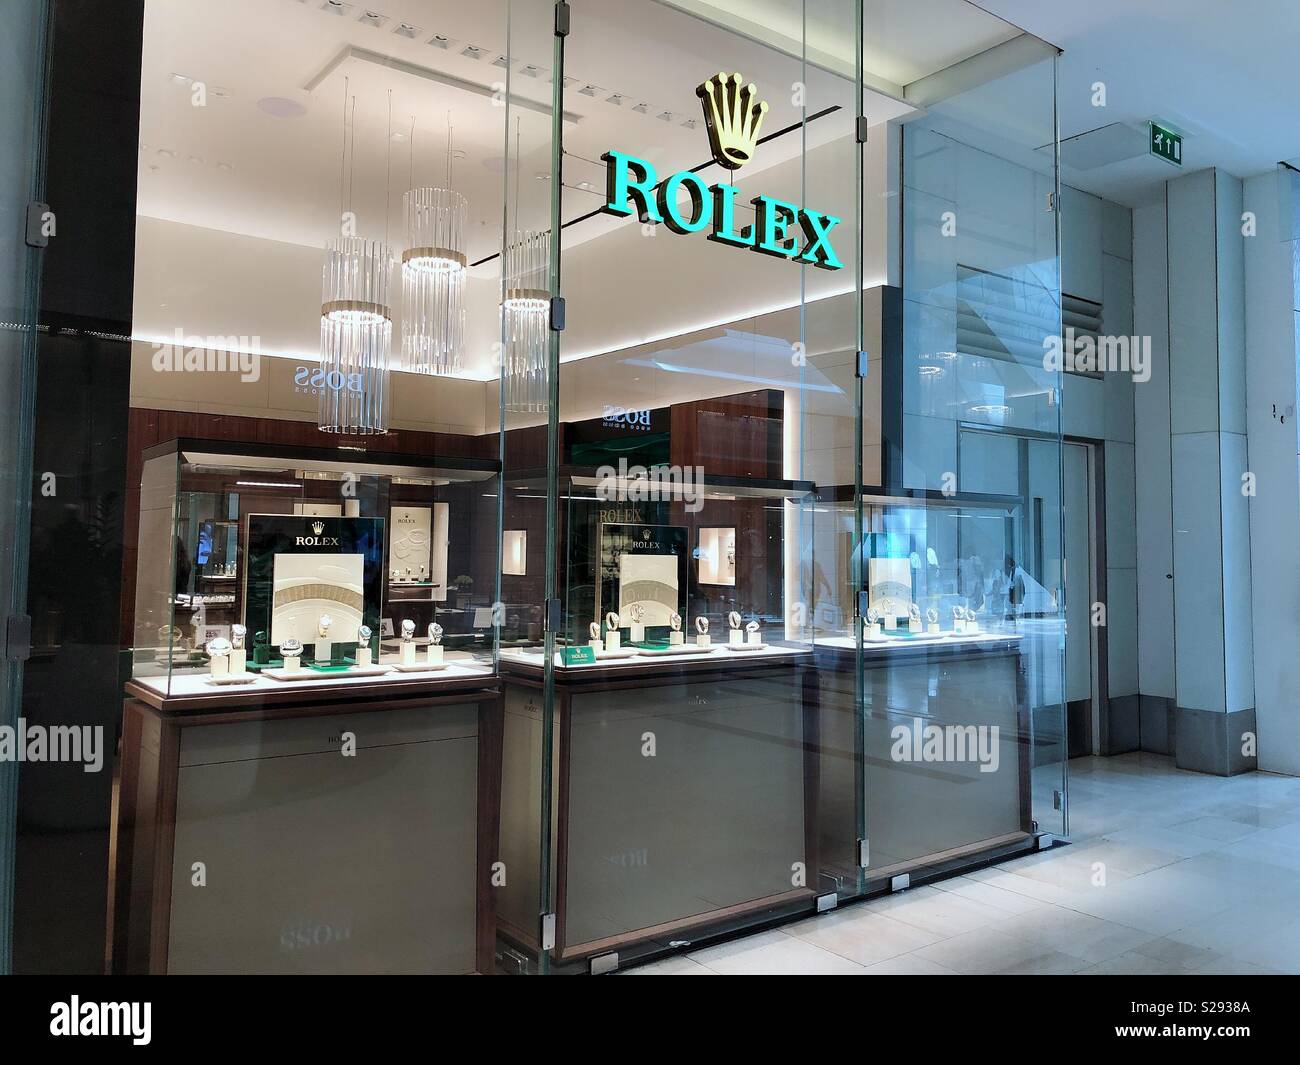 Rolex shop London Uk shopping Westfield Photo - Alamy